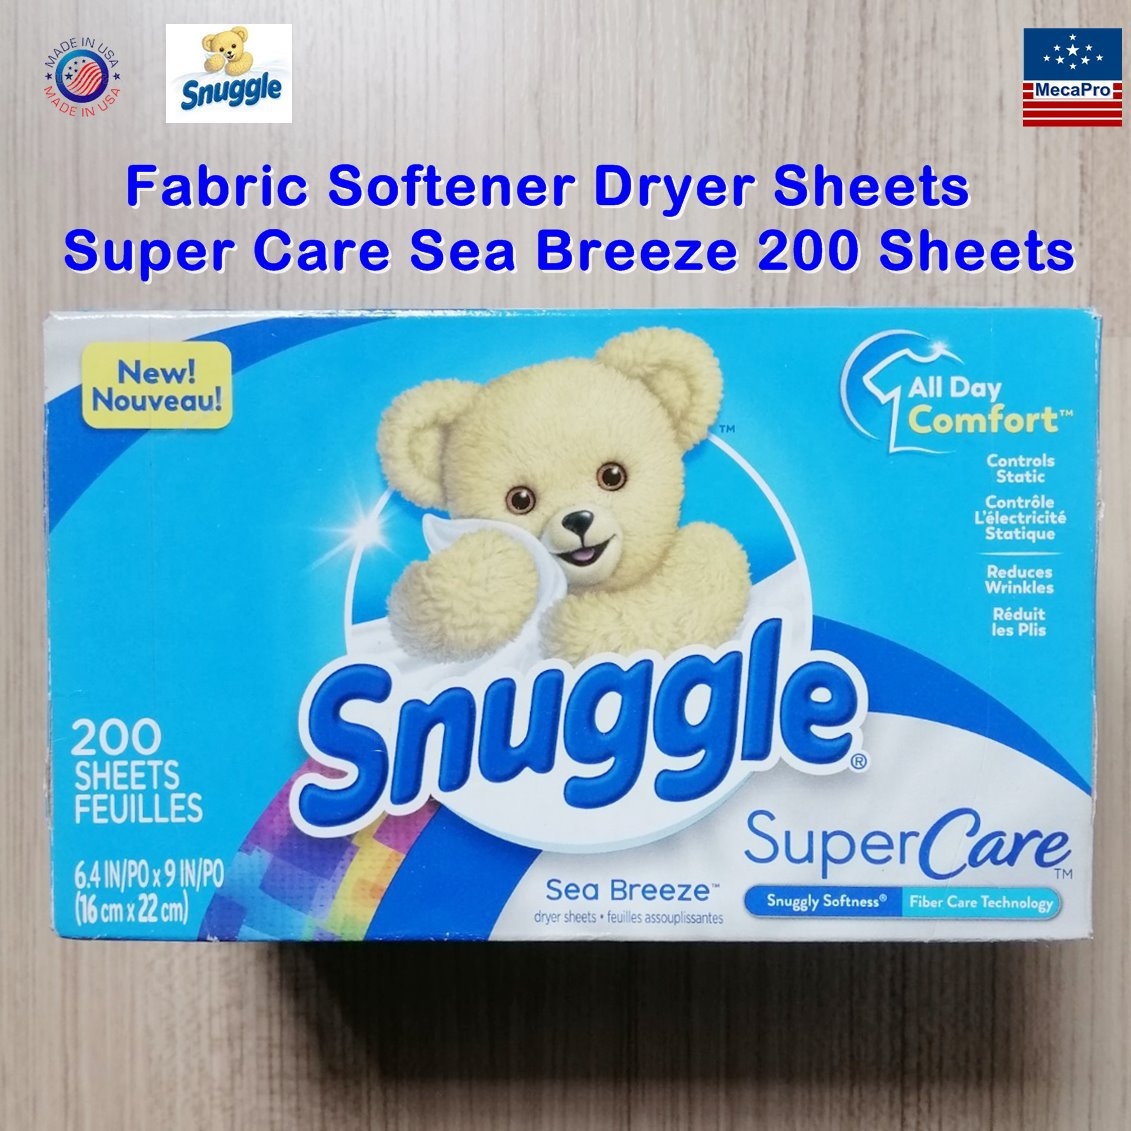 Snuggle® Fabric Softener Dryer Sheets Super Care Sea Breeze 200 Sheets แผ่นหอมอบผ้า กลิ่นซีบรีส